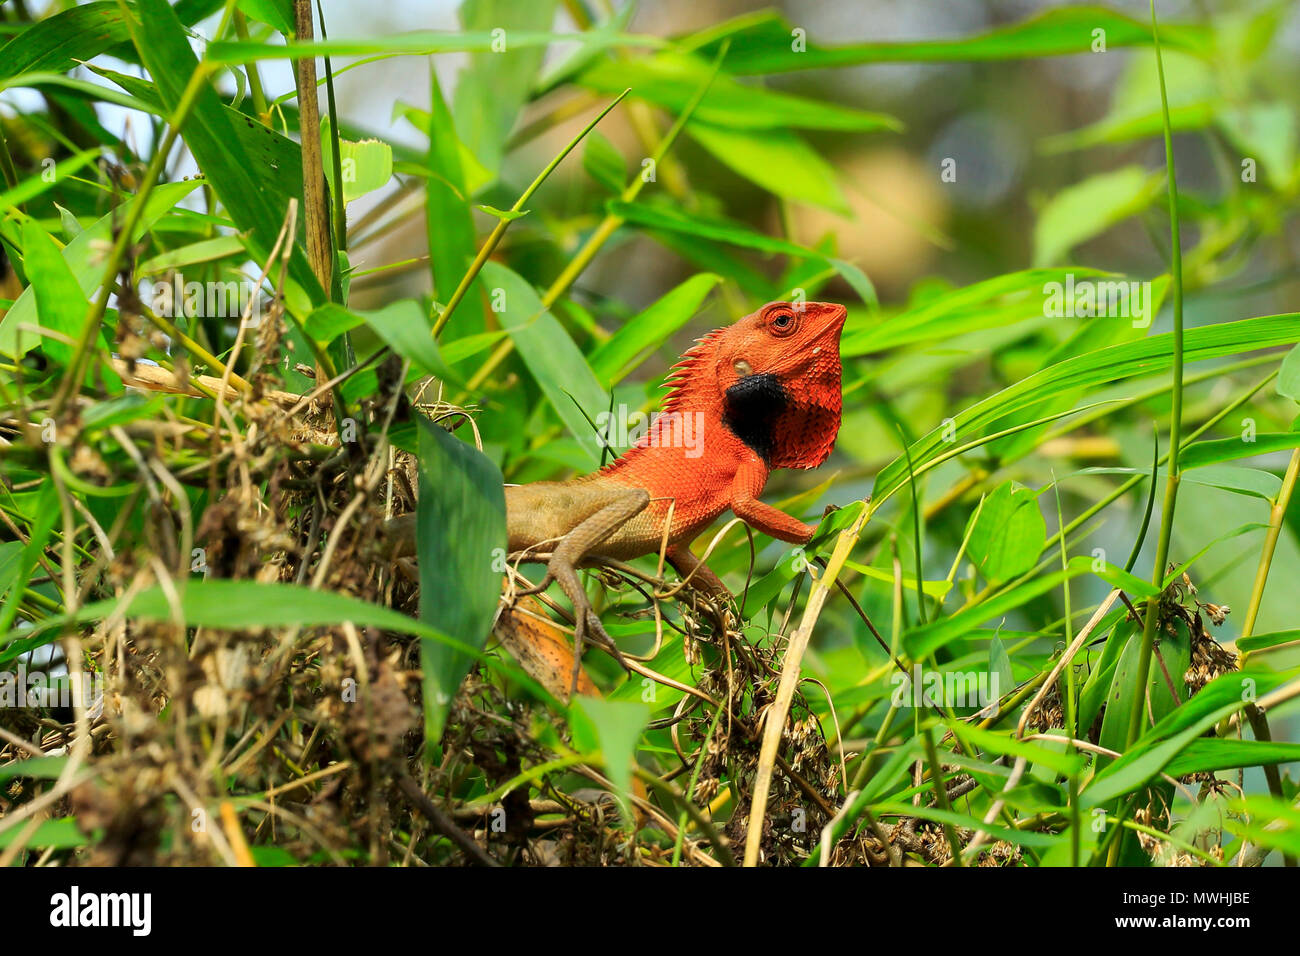 Common garden lizard, eastern garden lizard or changeable lizard (Calotes versicolor), Satchari National Park, Habiganj, Bangladesh Stock Photo